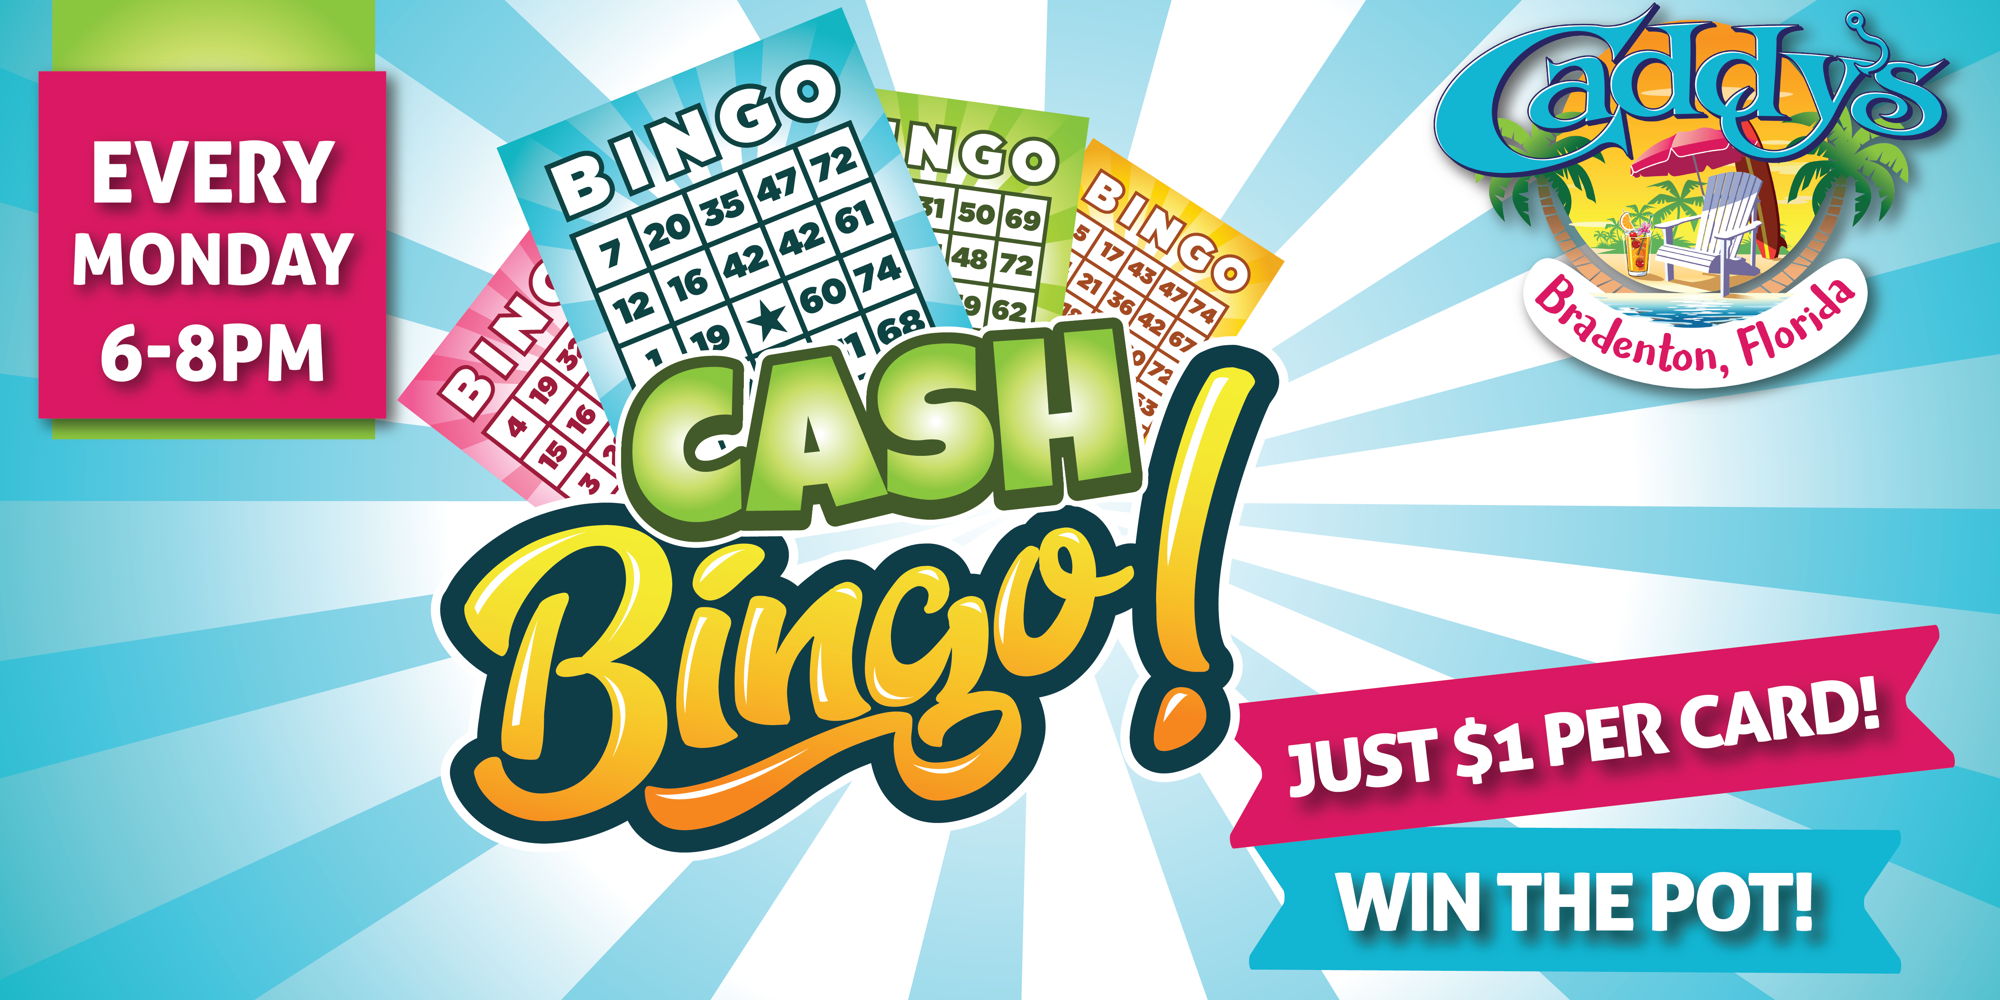 Cash Bingo! promotional image